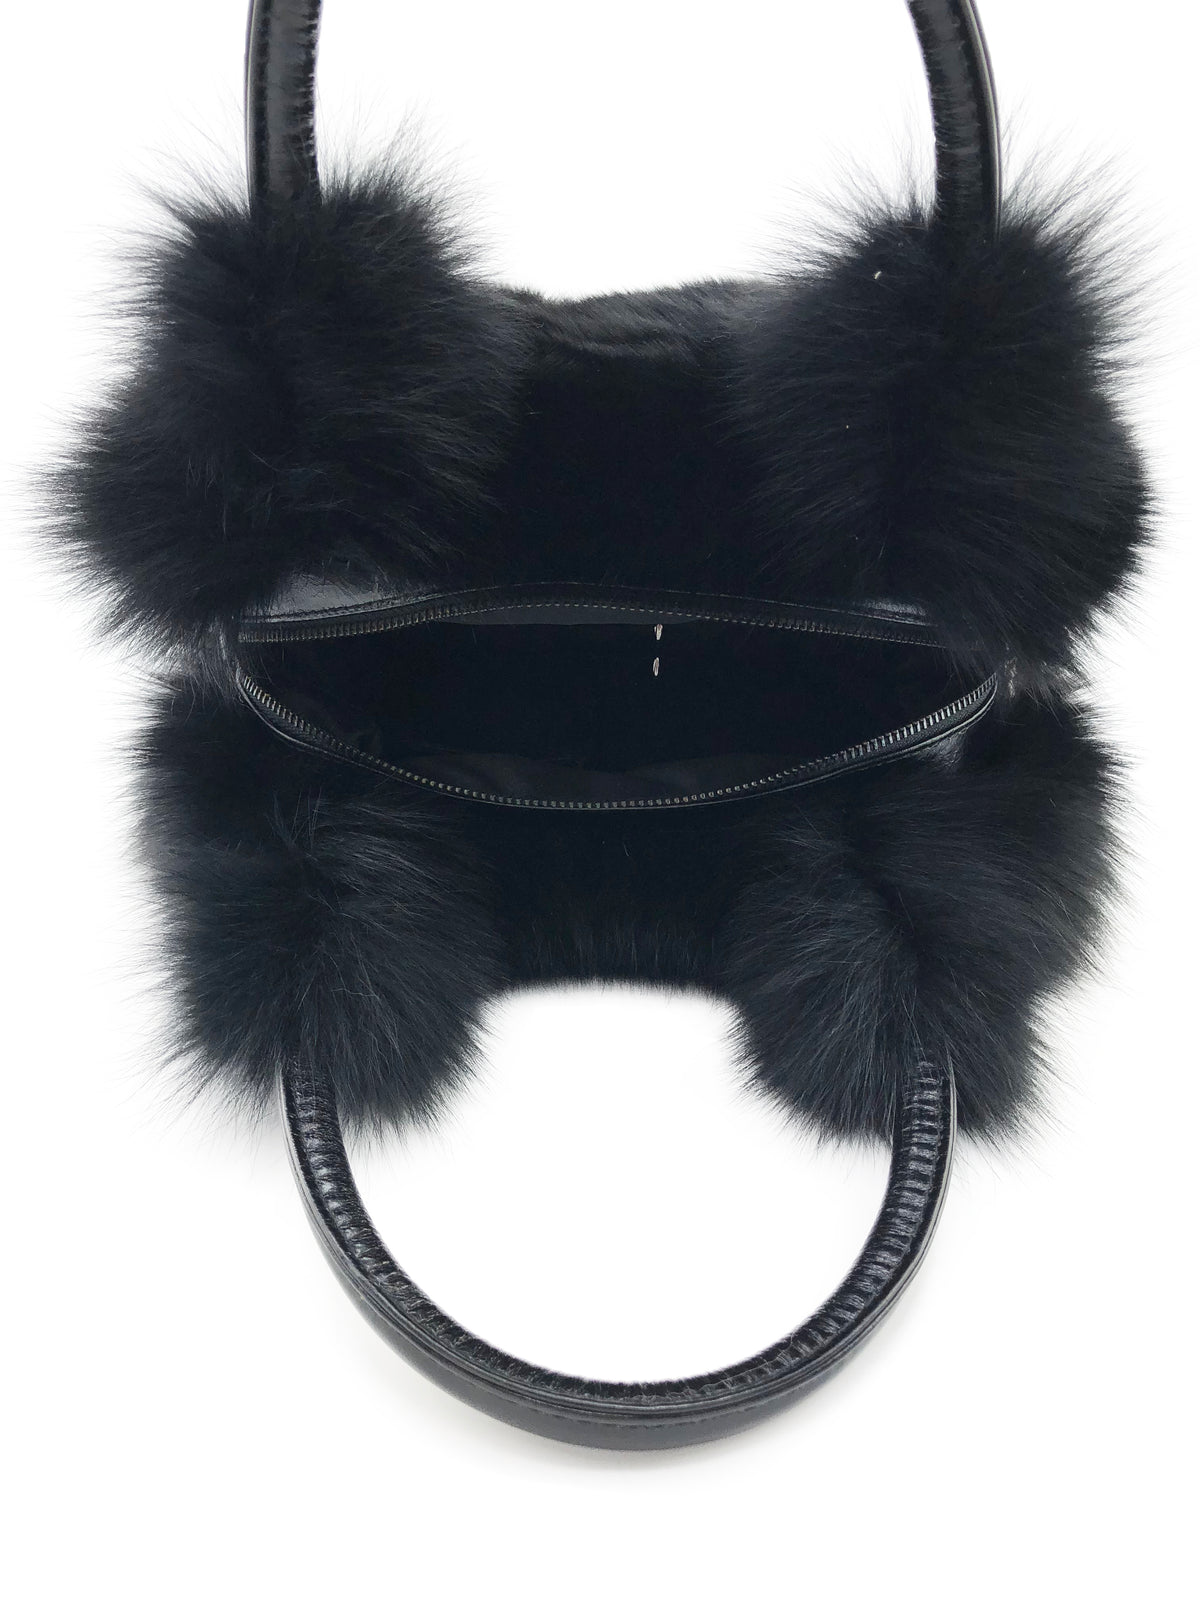 Fox Fur Handbag with Leather Strap - paulamariecollection